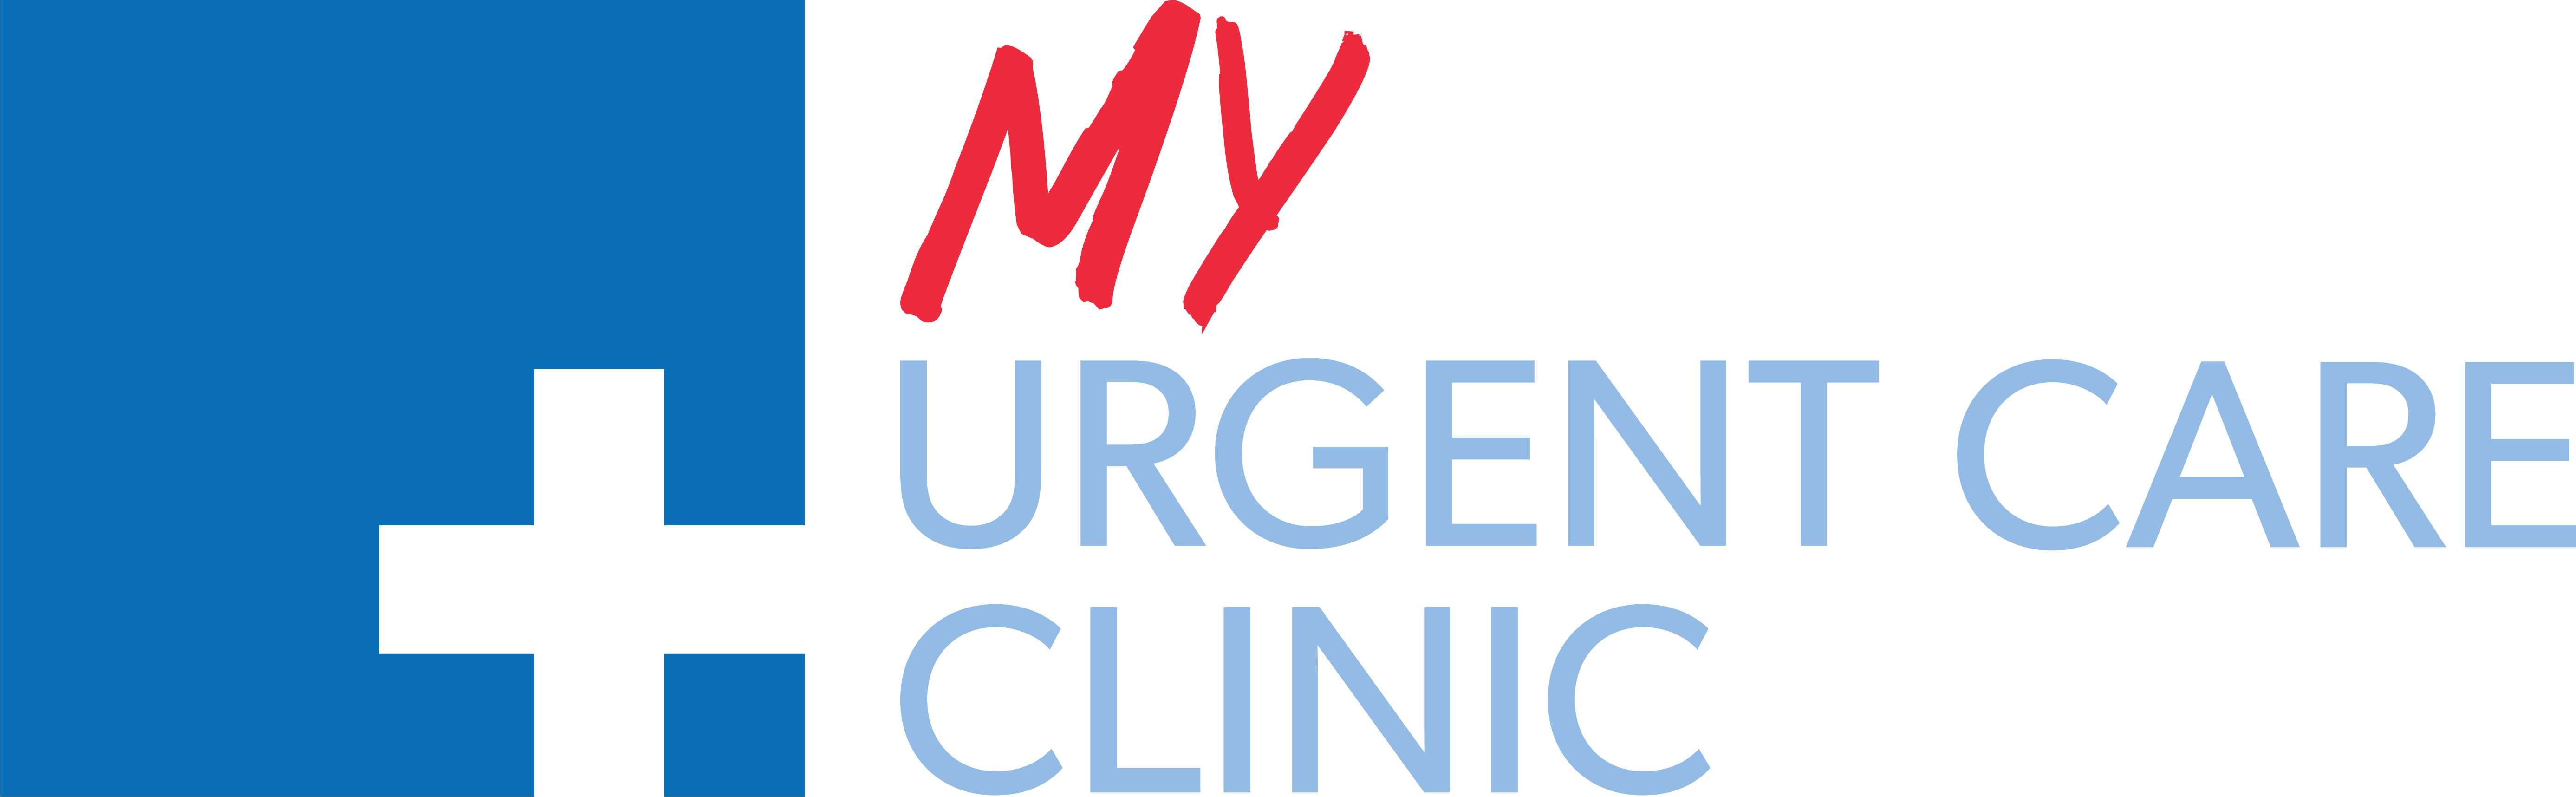 My Urgent Care Clinic Logo